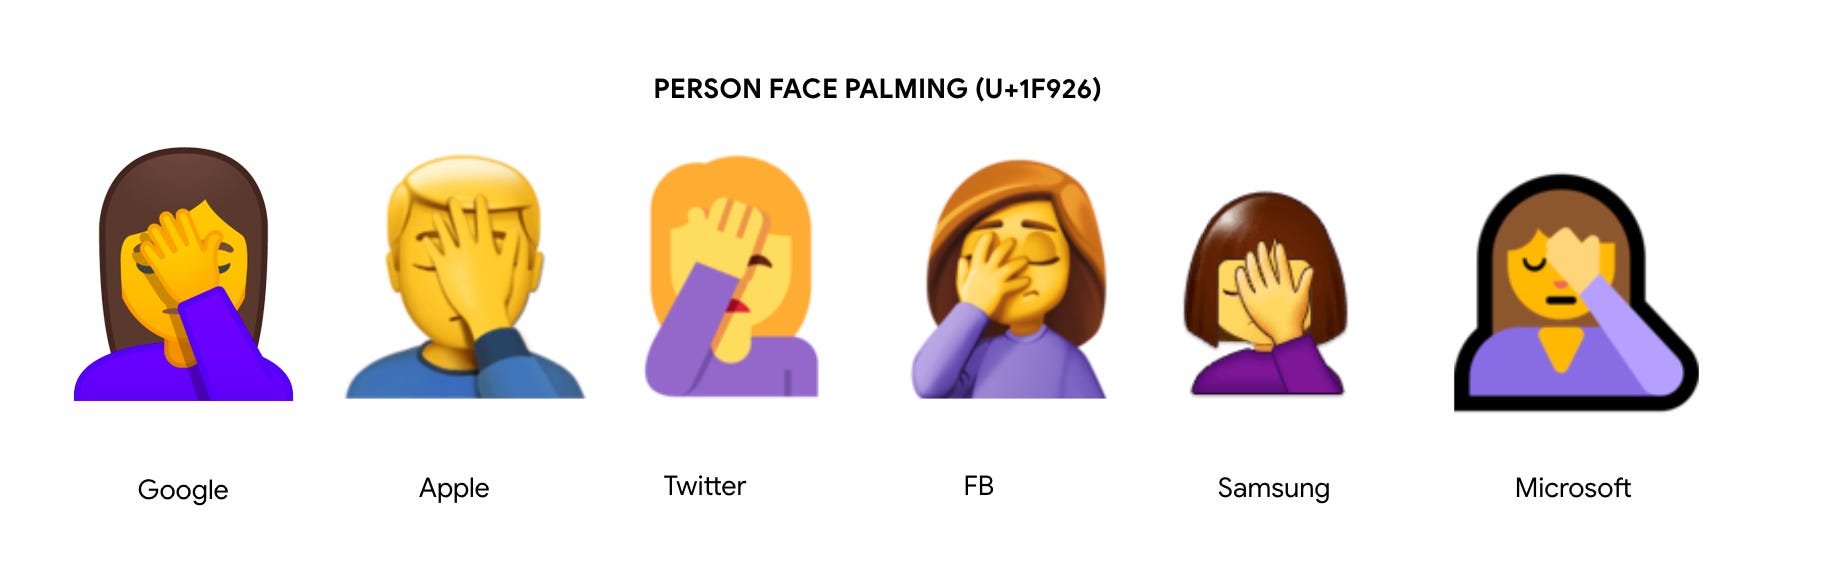 🤝 Handshake Emoji Copy Paste and Download PNG